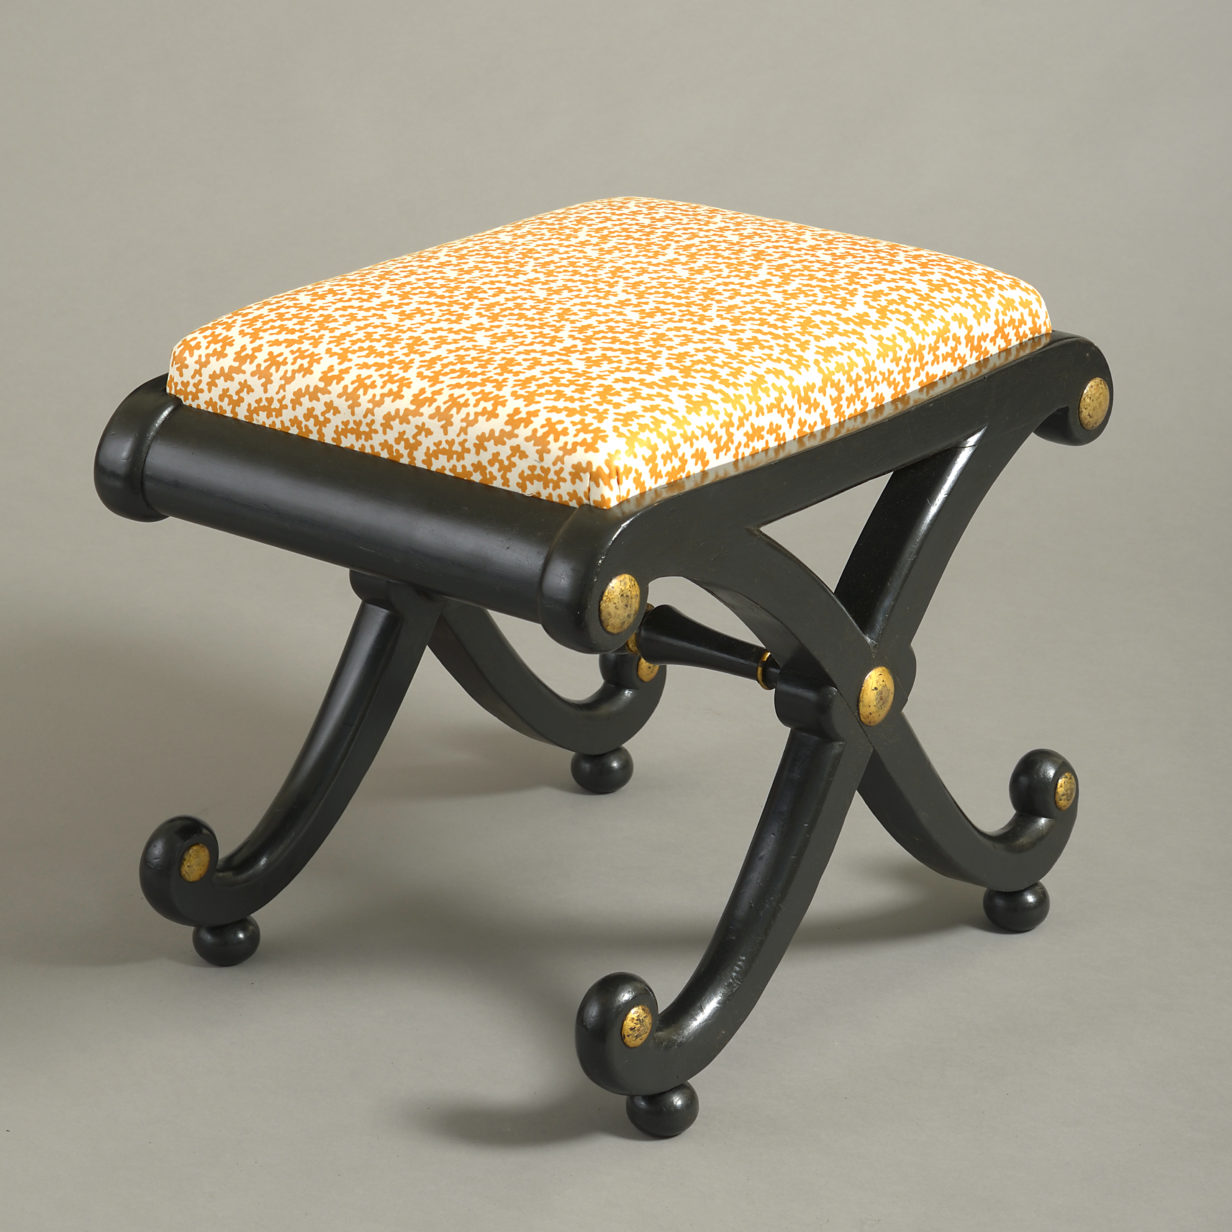 19th century william iv period ebonised x-frame stool